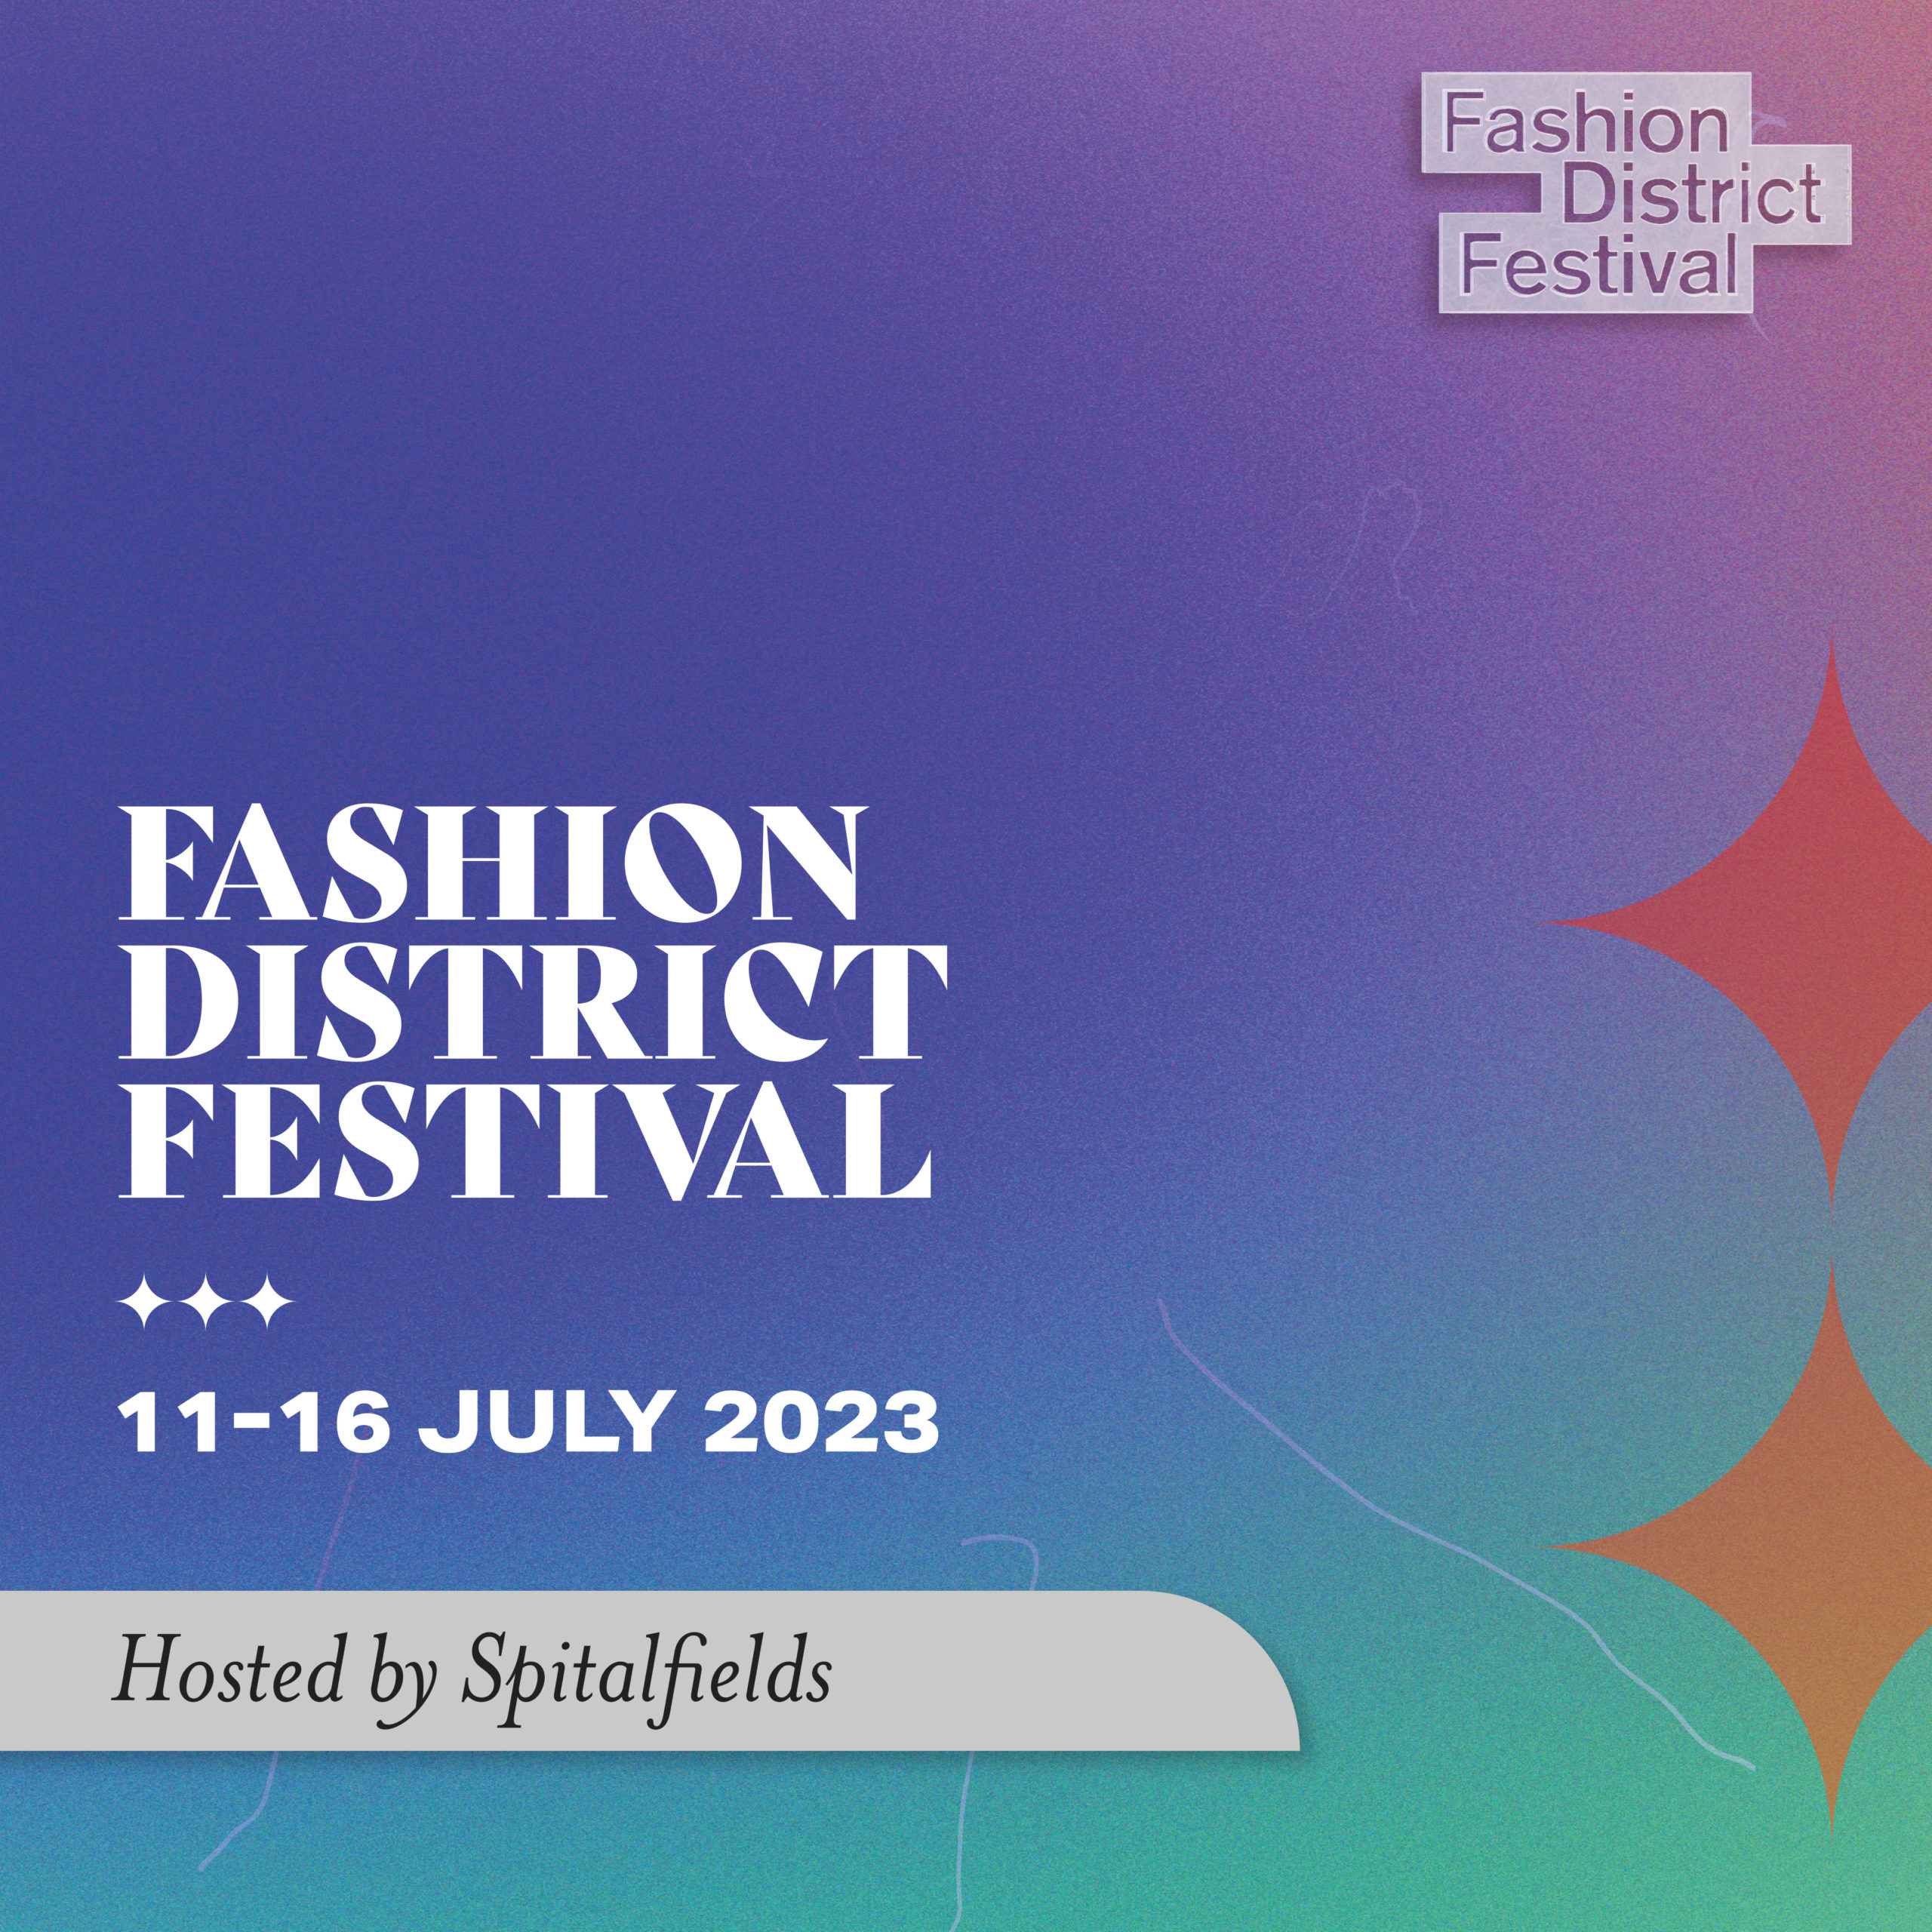 Fashion District Festival Returns for 2023!